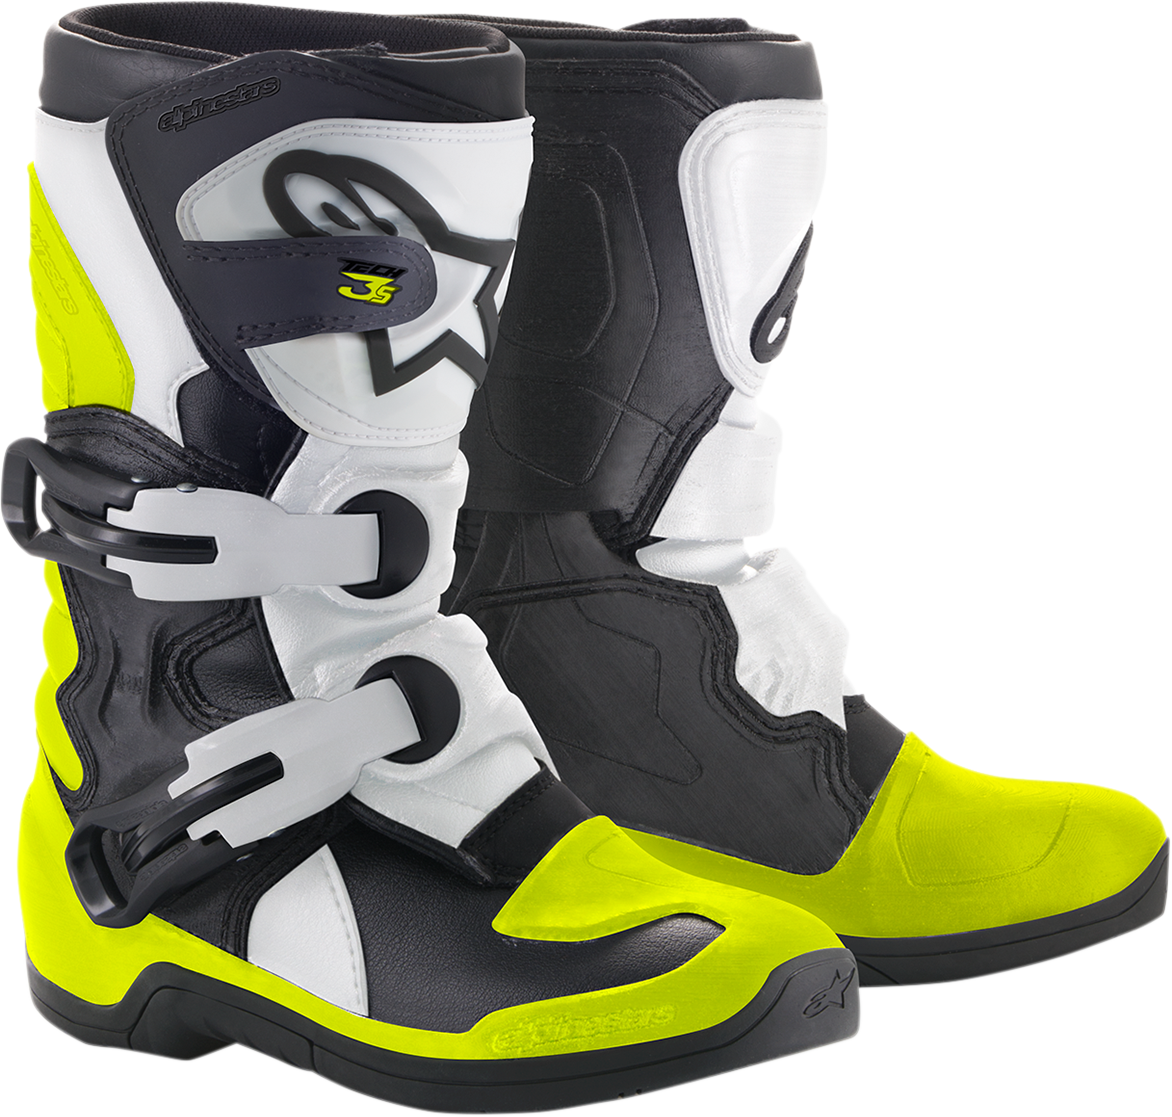 ALPINESTARS Youth Tech 3S Boots - Black/White/Yellow - US 11 2014518-125-11